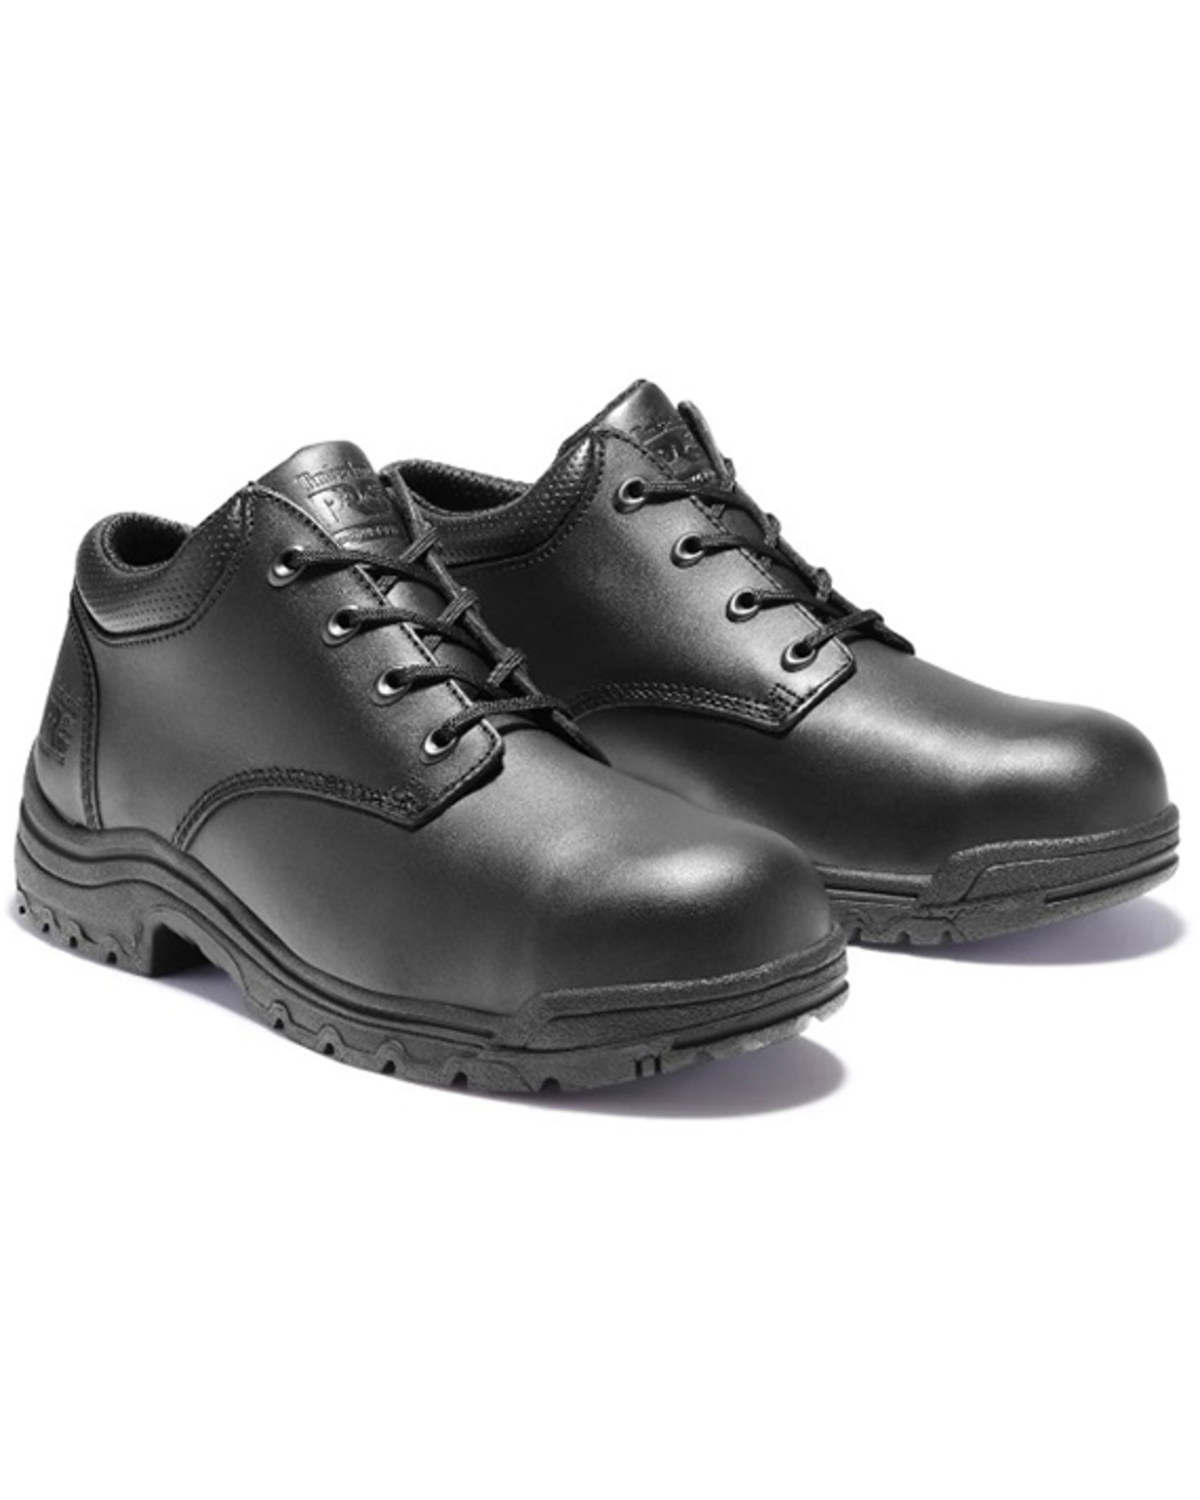 Timberland Men's TiTAN Oxford Work Shoes - Steel Toe